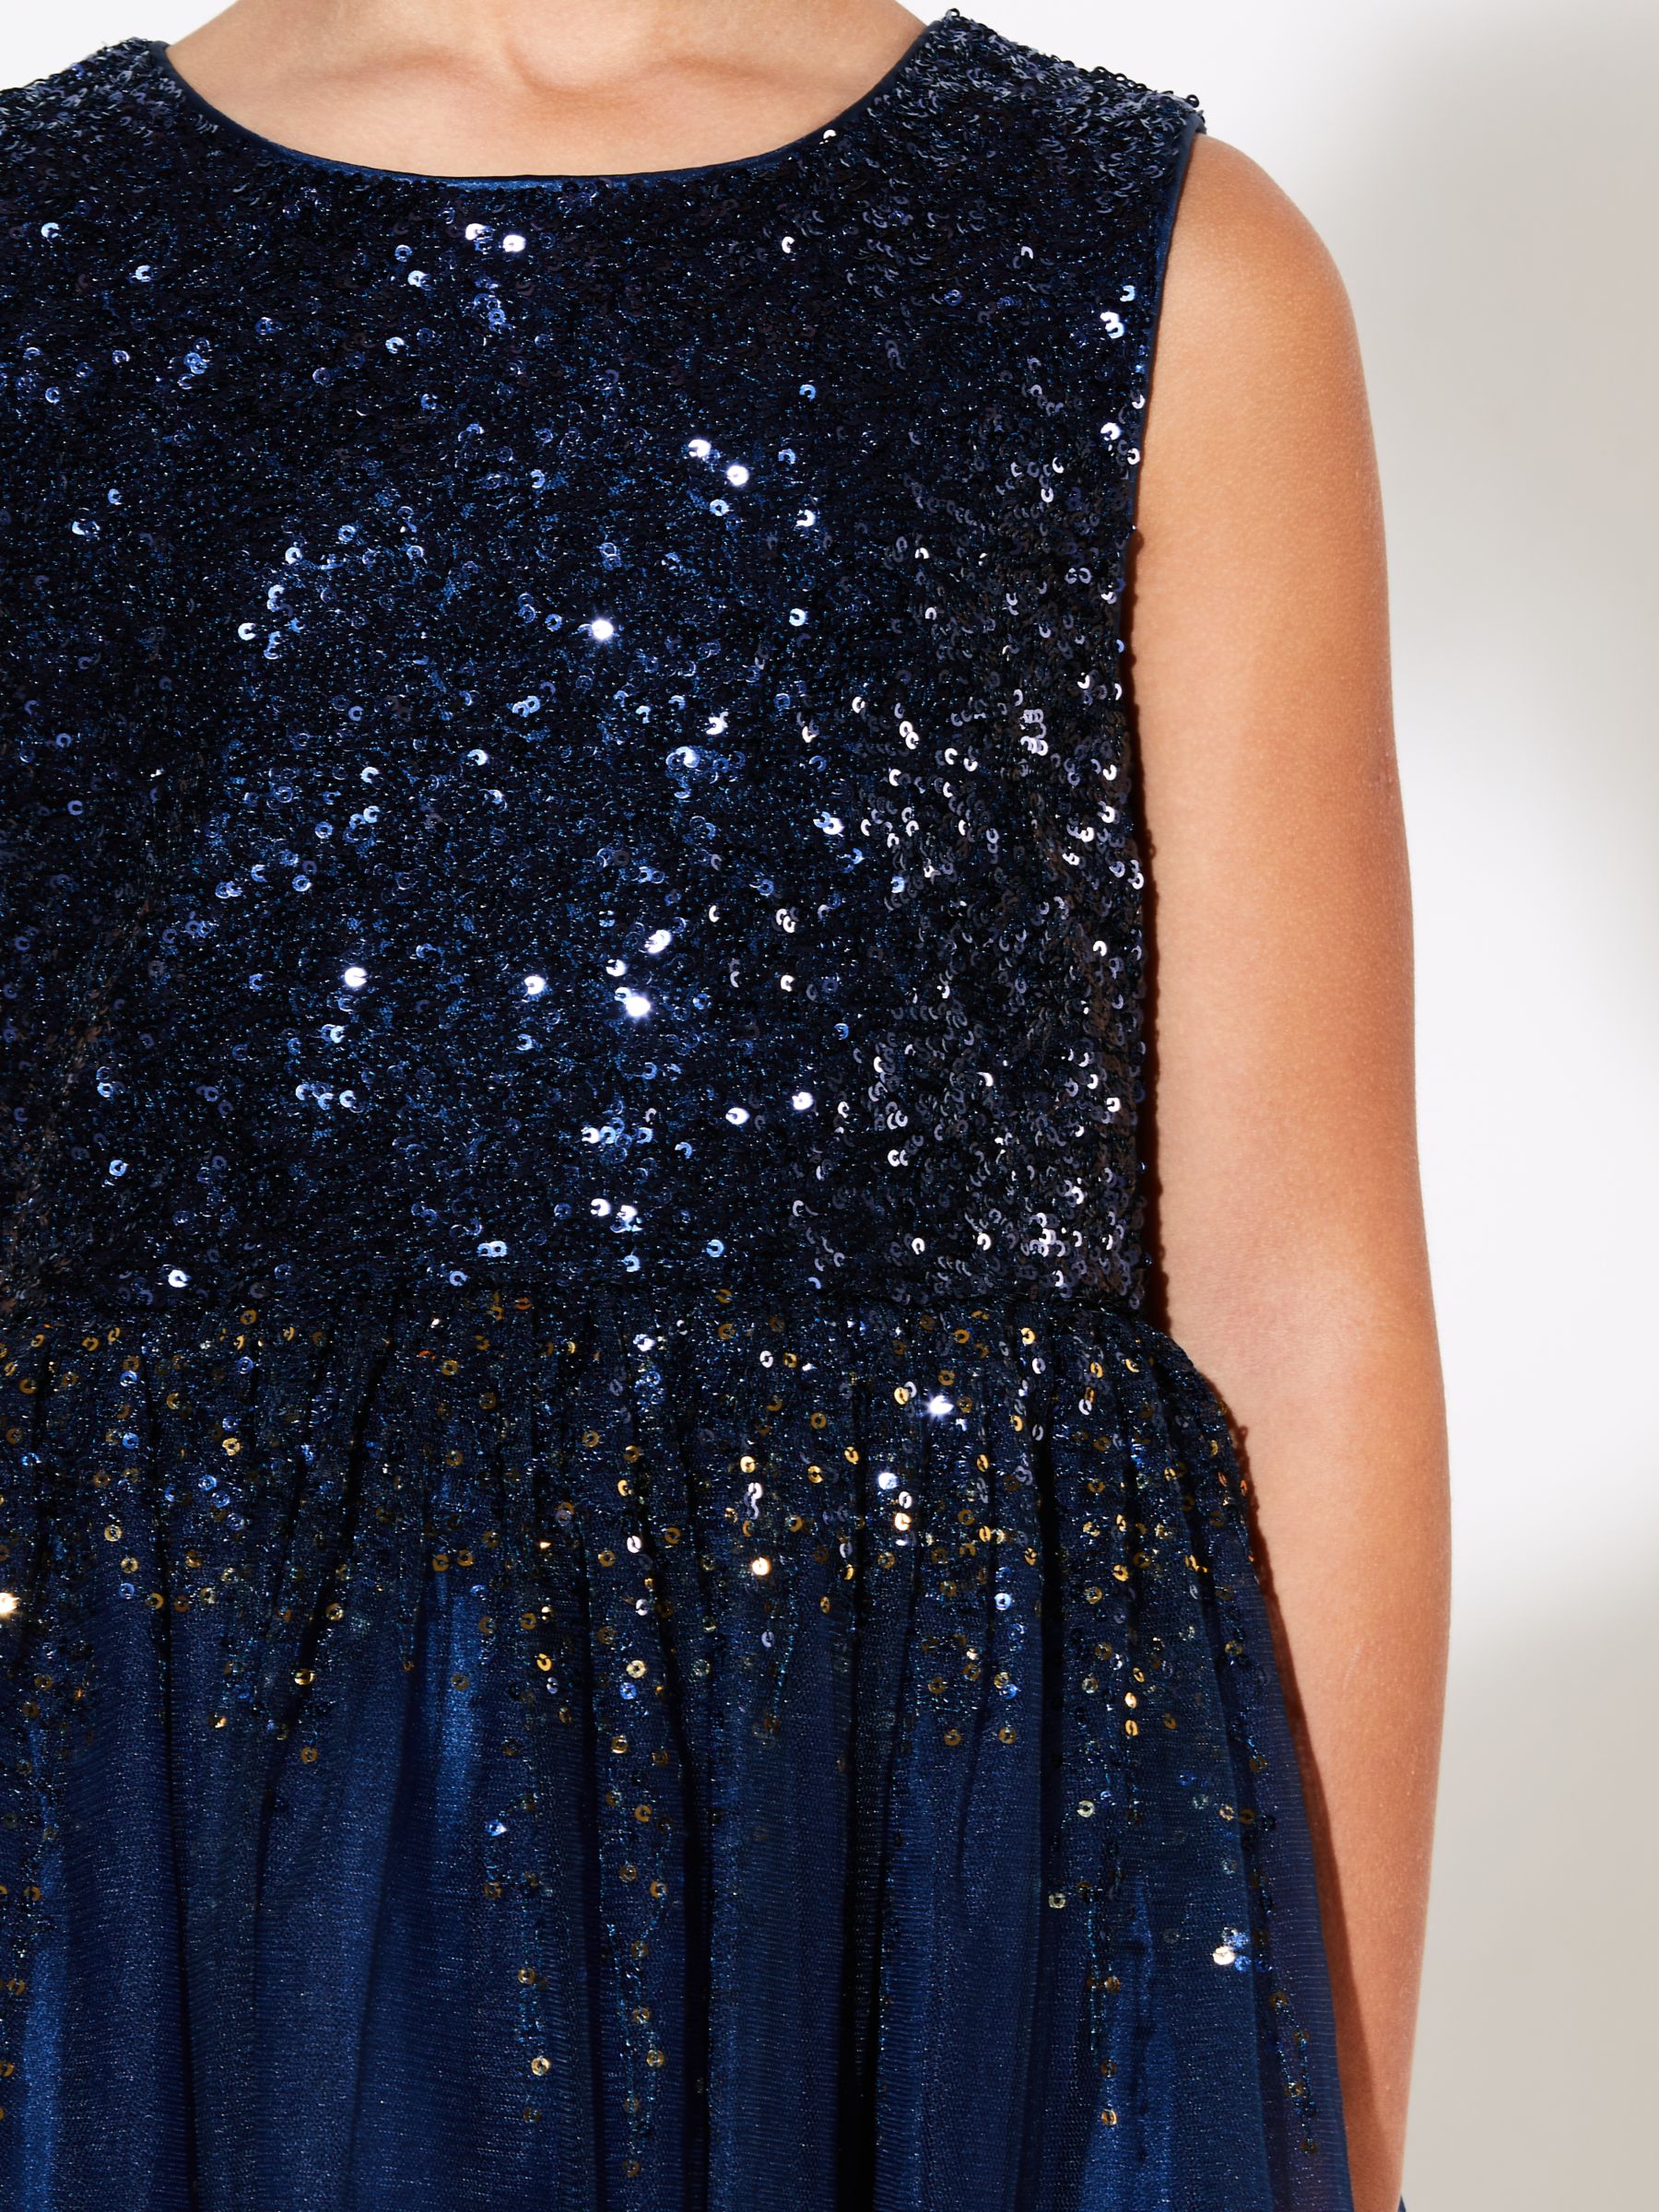 girls blue sparkly dress